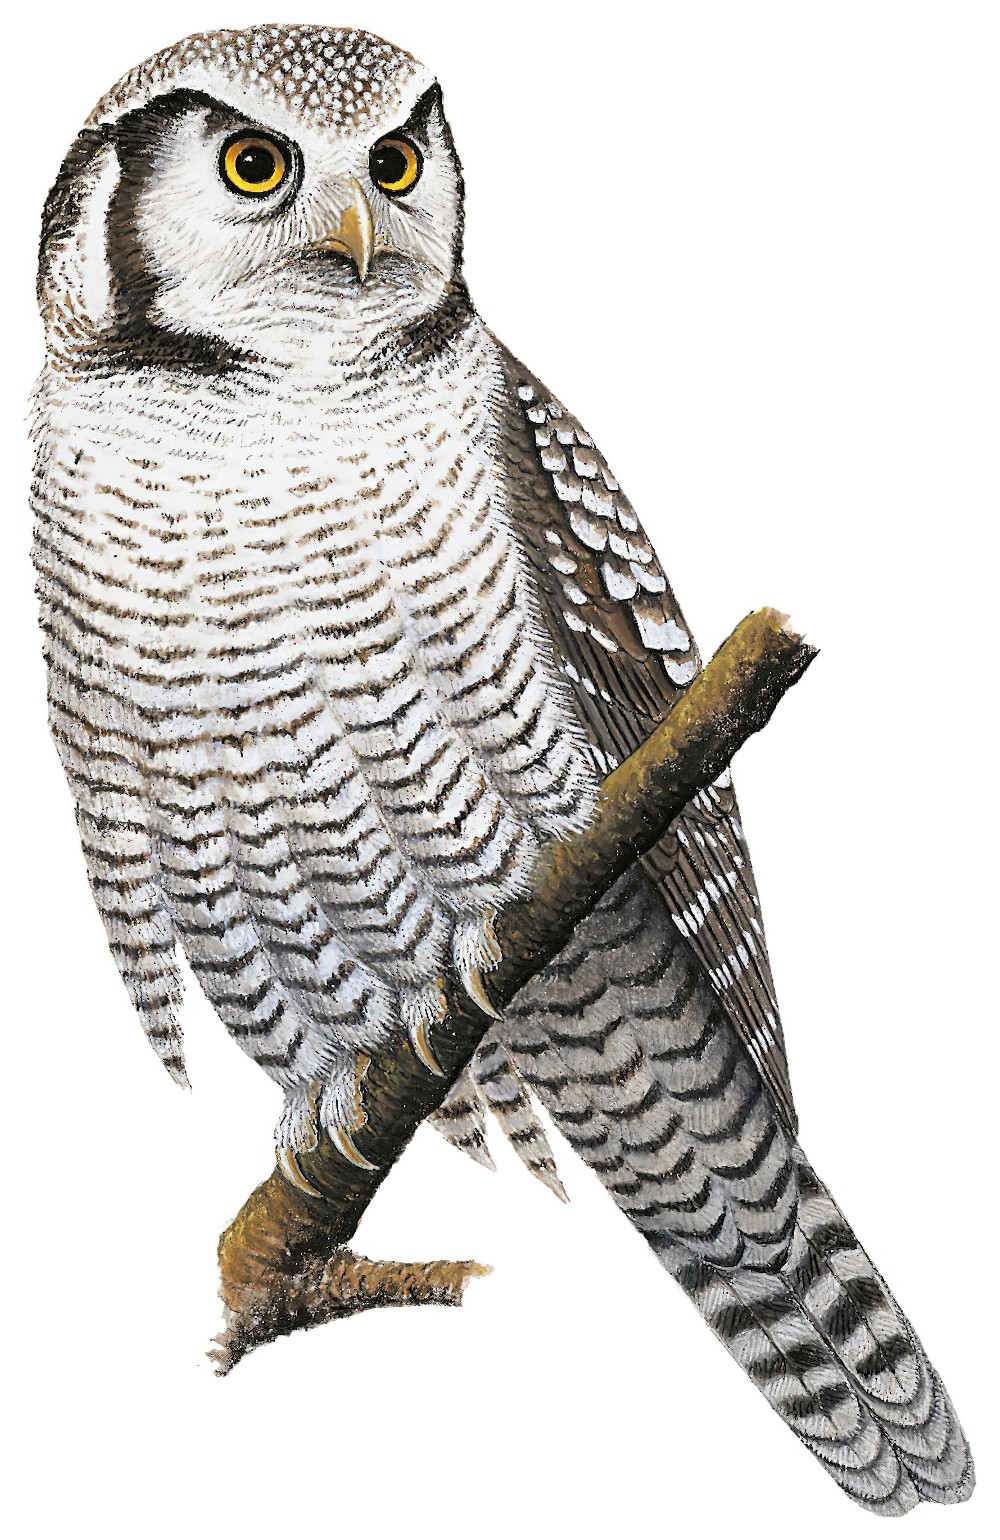 Northern Hawk Owl / Surnia ulula